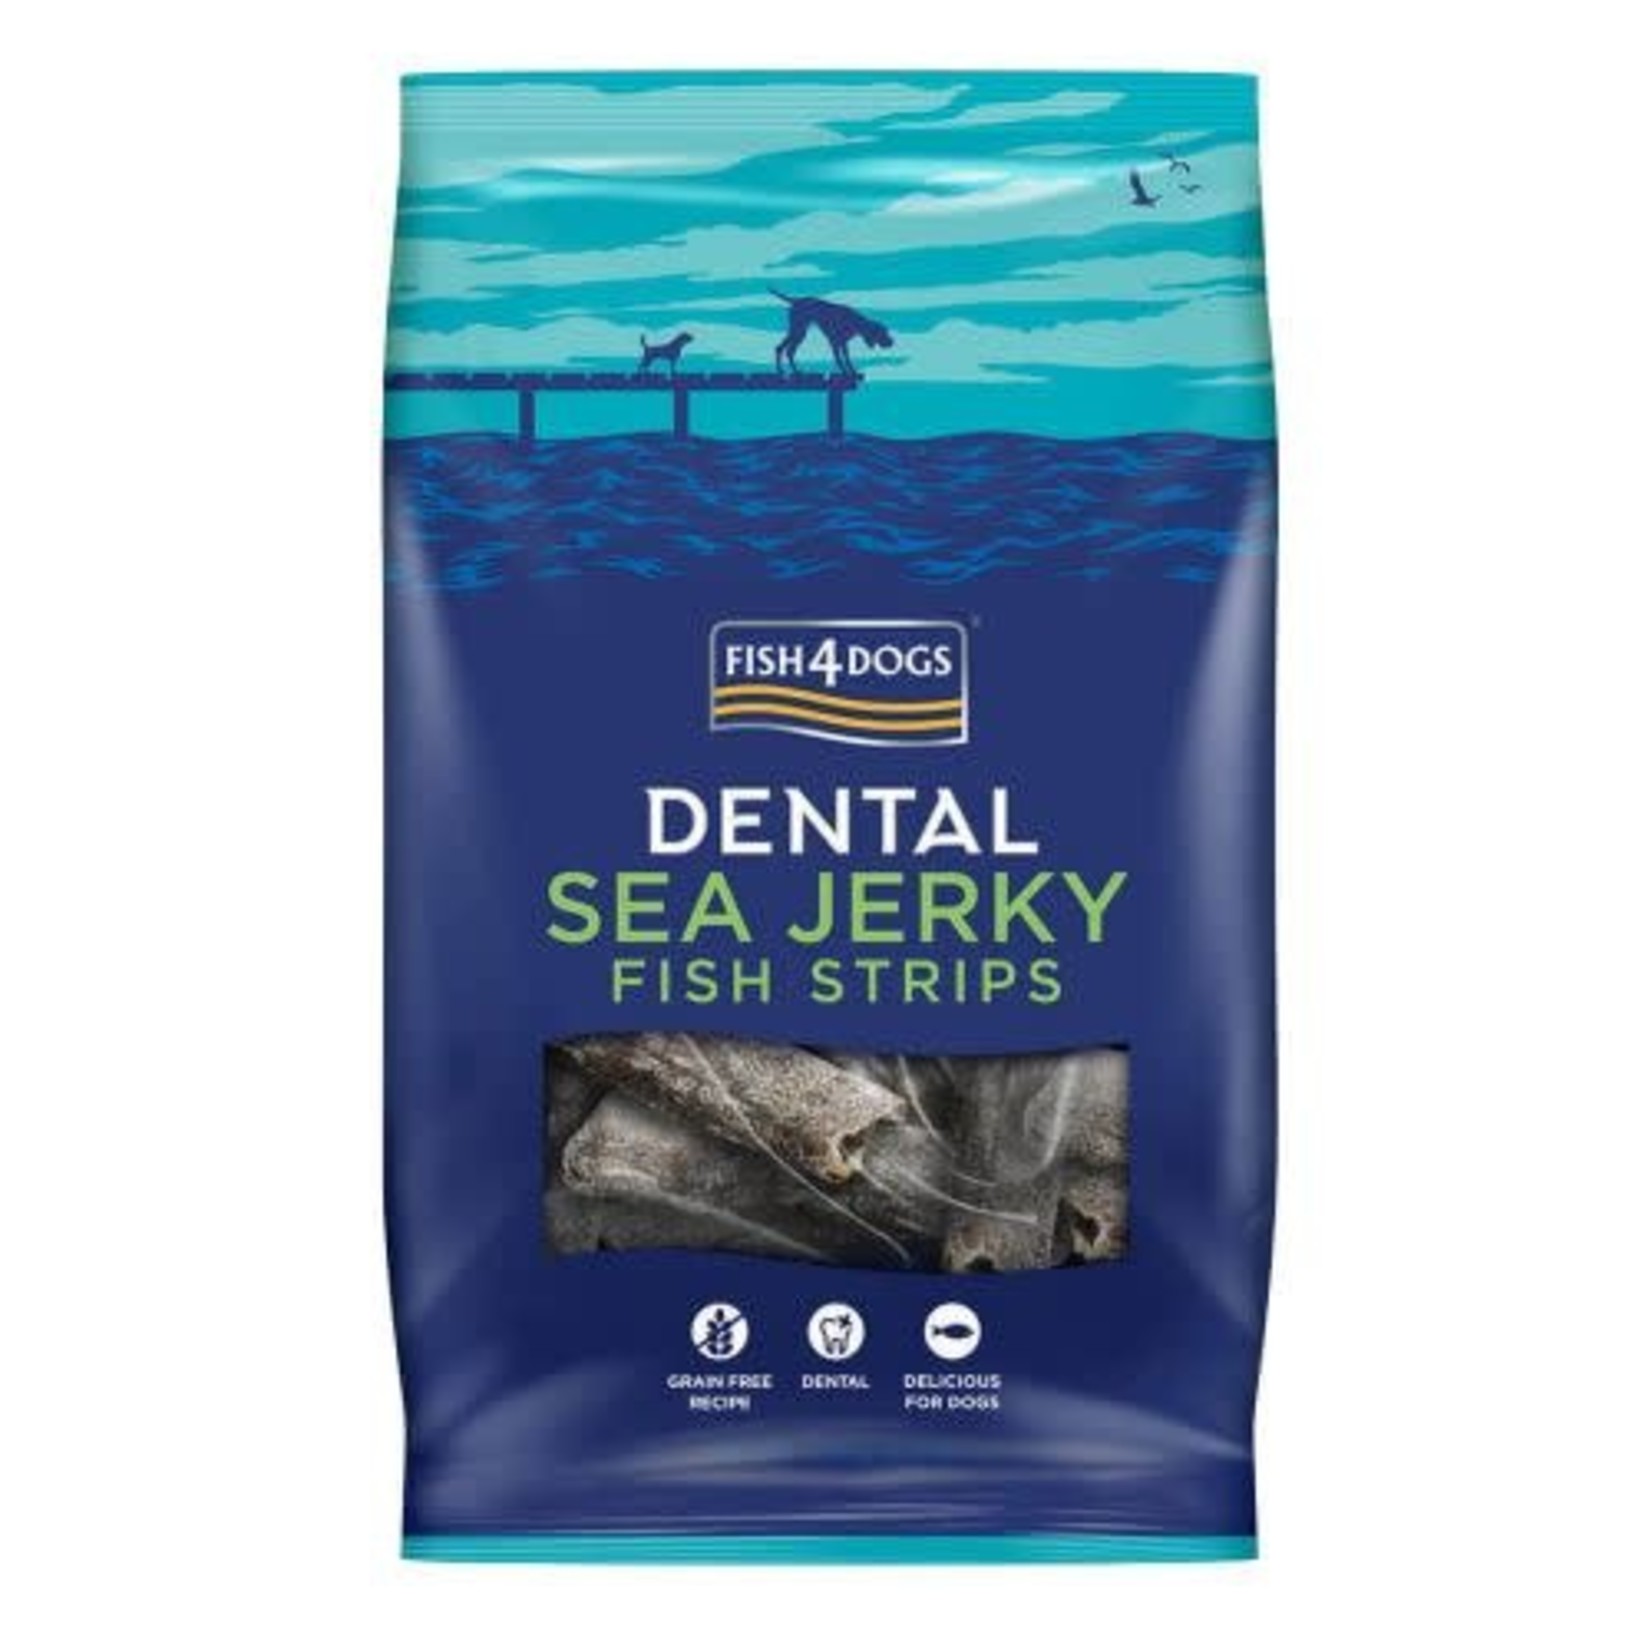 Fish4Dogs Dental Sea Jerky Fish Strips Dog Chews, 100g